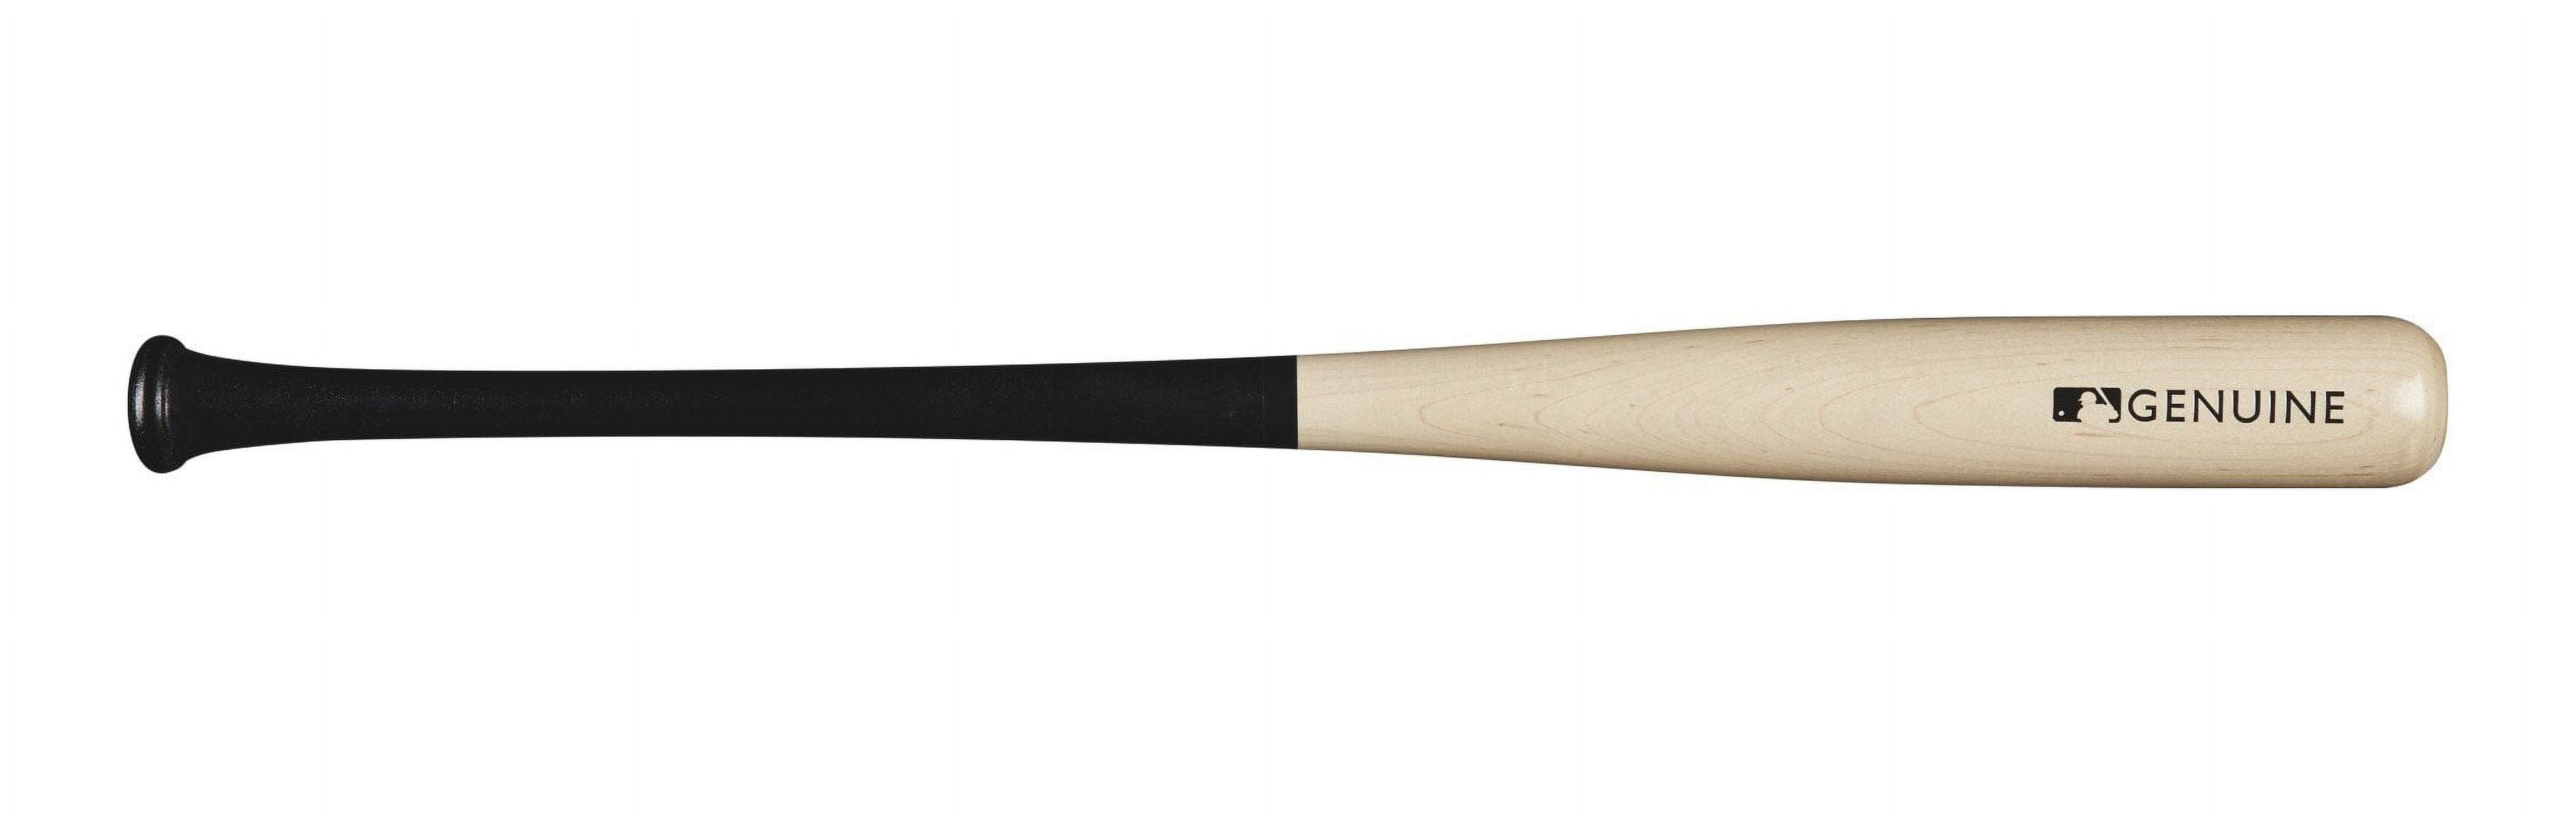 CLOSEOUT Louisville Slugger I13 Hard Maple Wood Baseball Bat WBHM14-13CBN